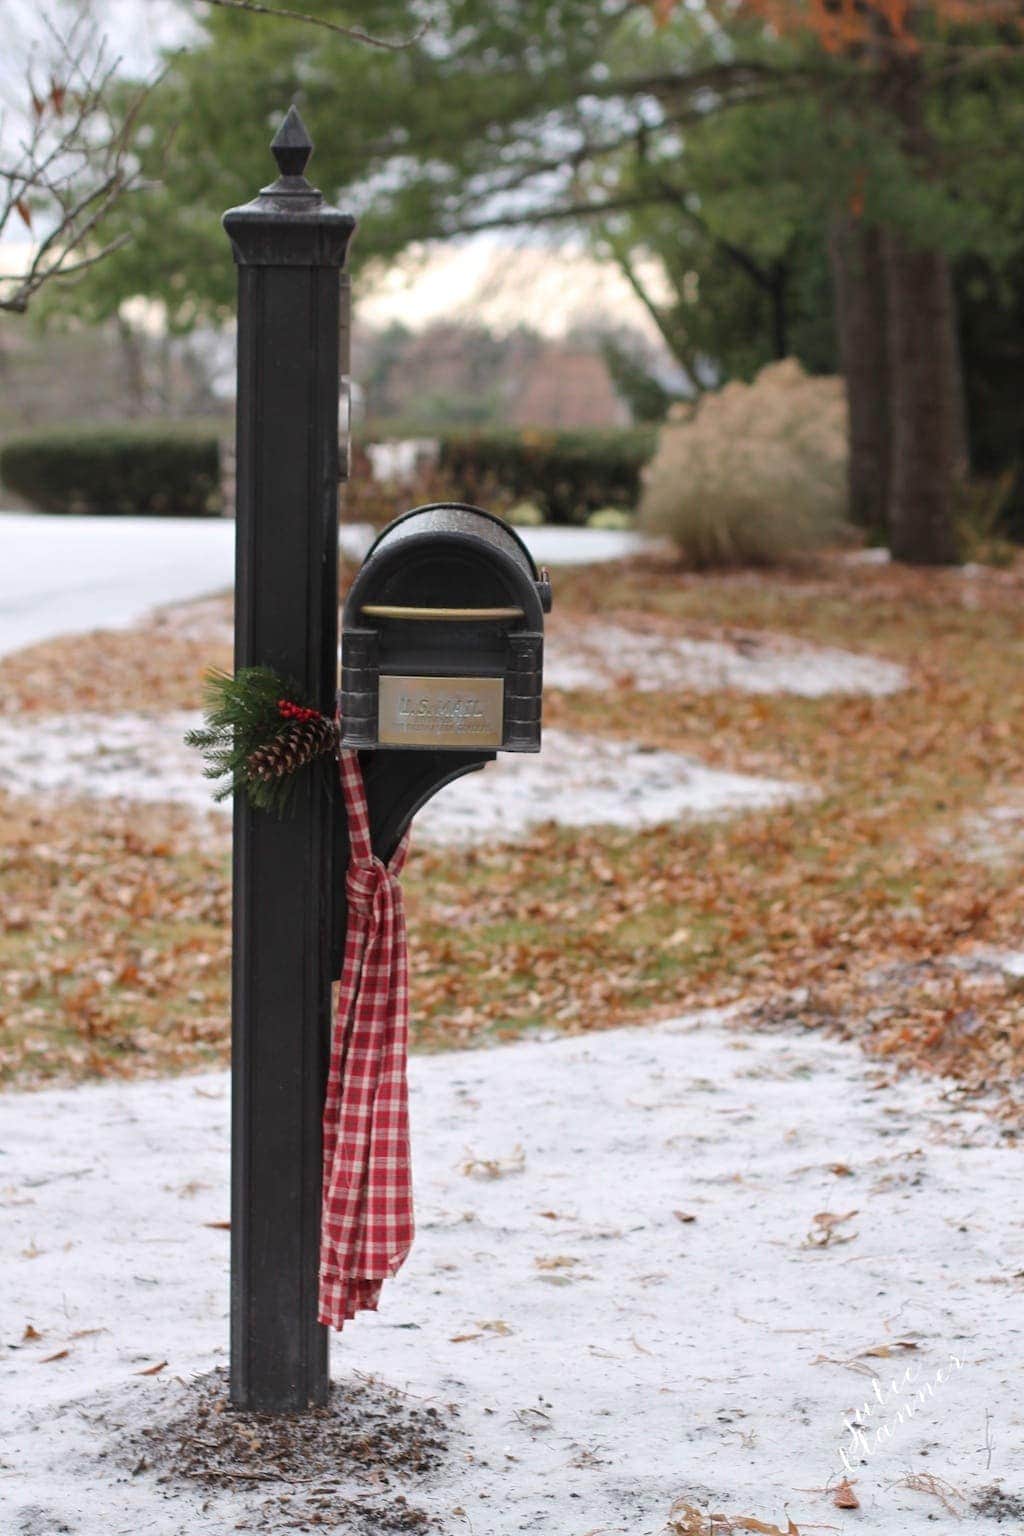 Christmas mailbox decoration a scarf wrapped around the mailbox